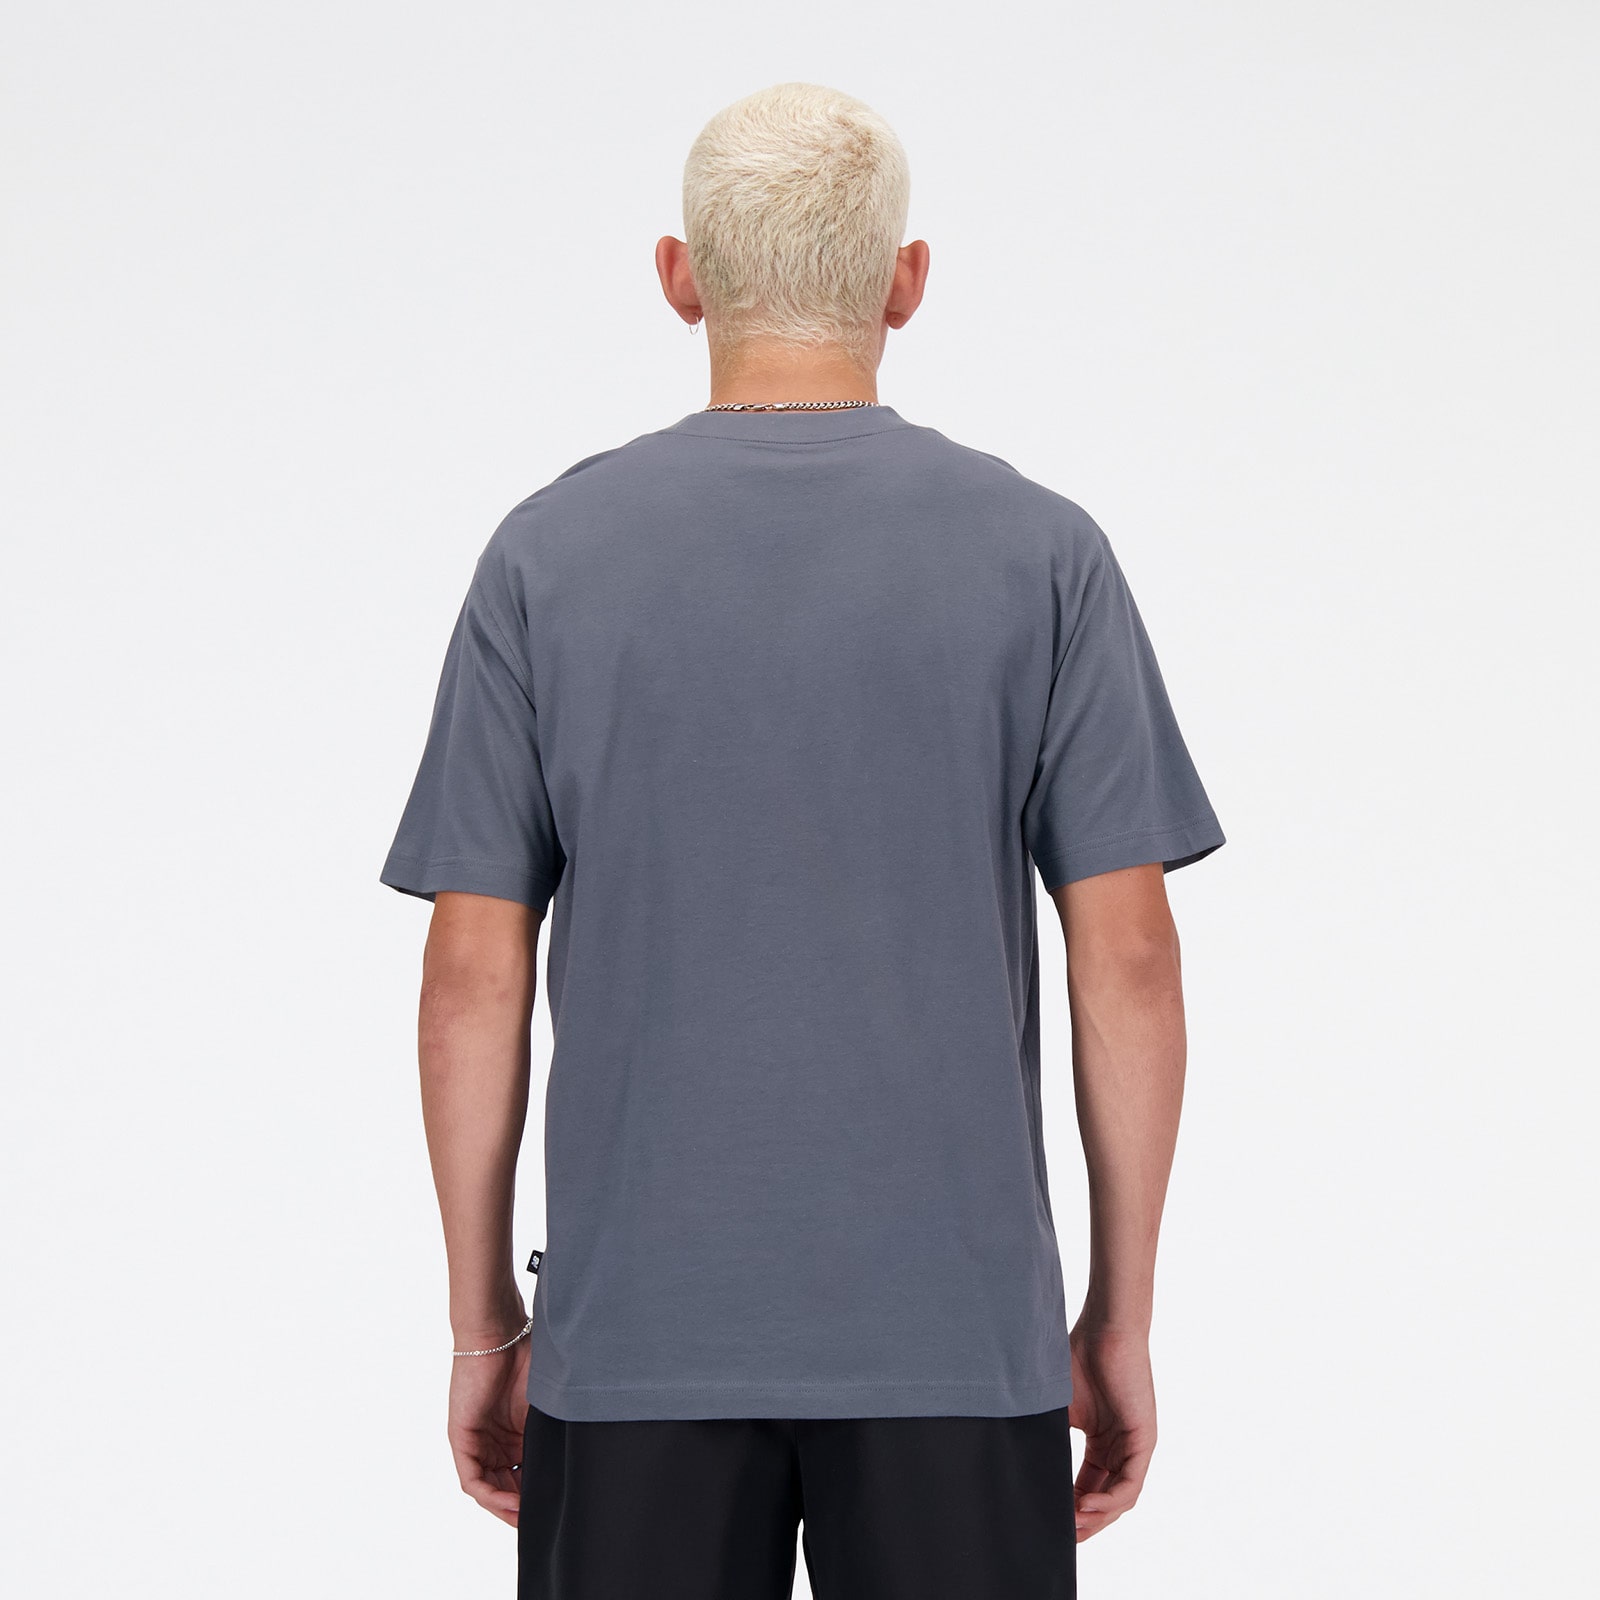 New Balance Linear Logo リラックス ショートスリーブTシャツ